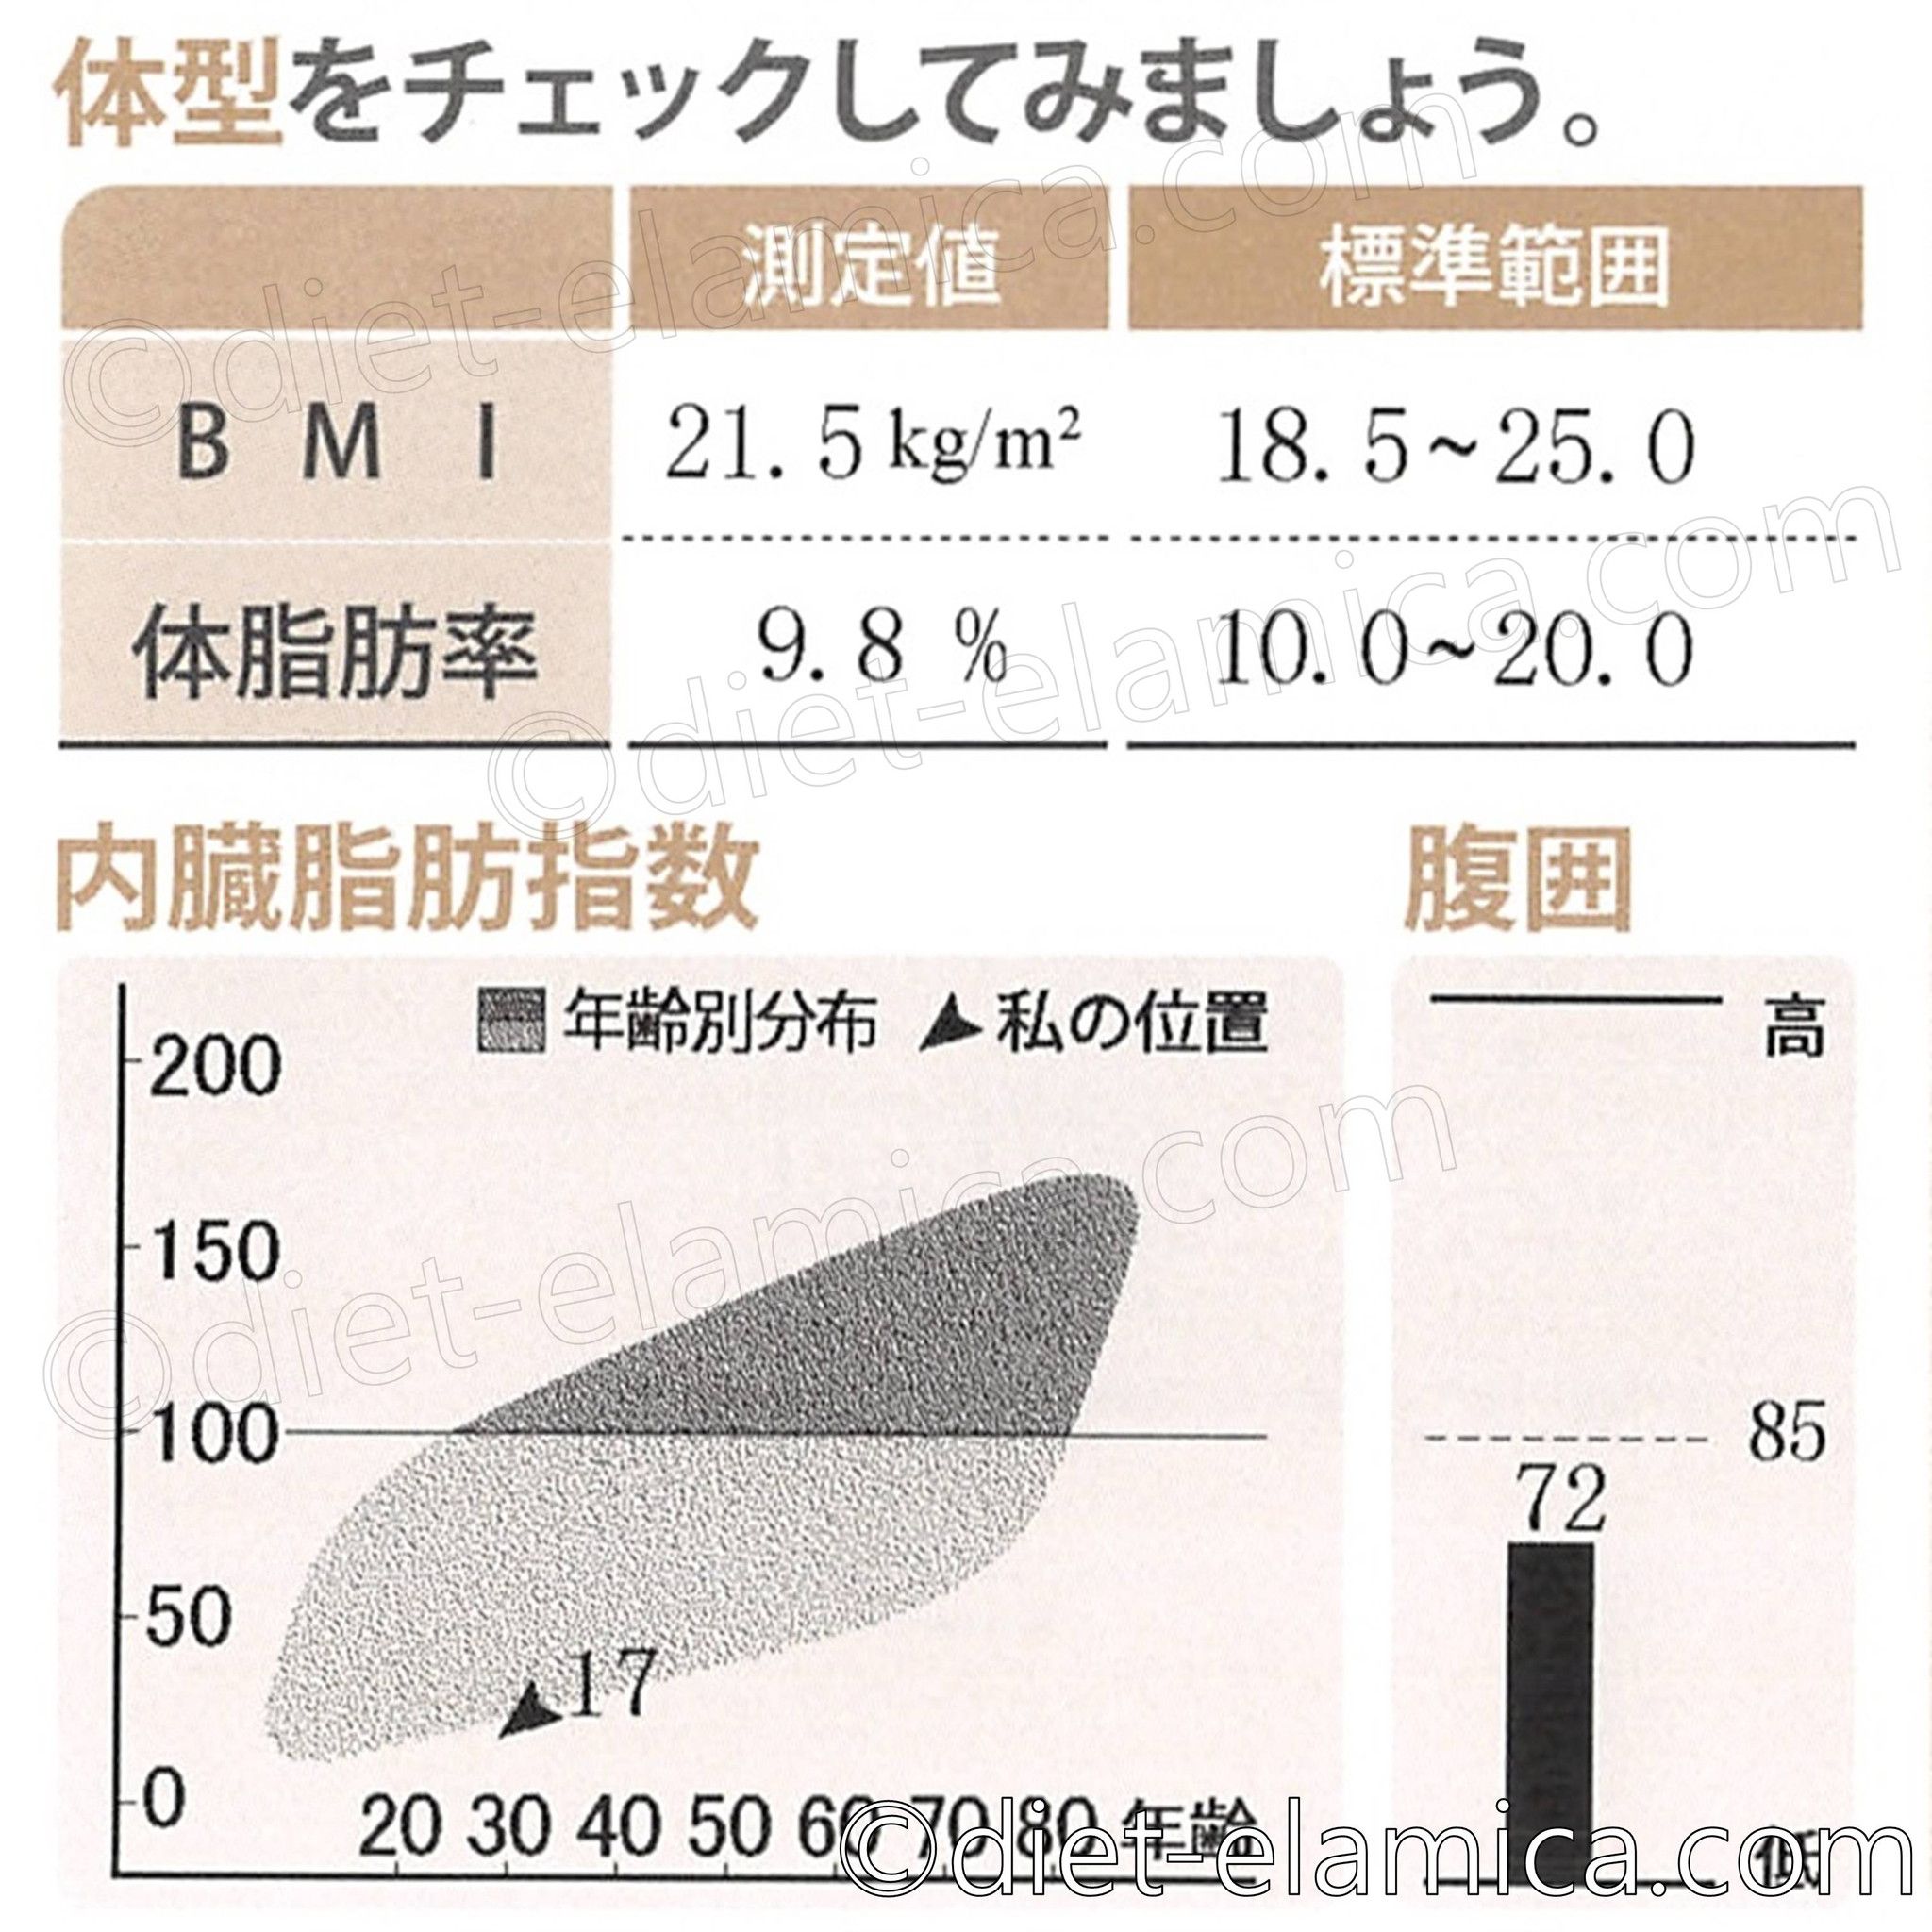 BMI21.5